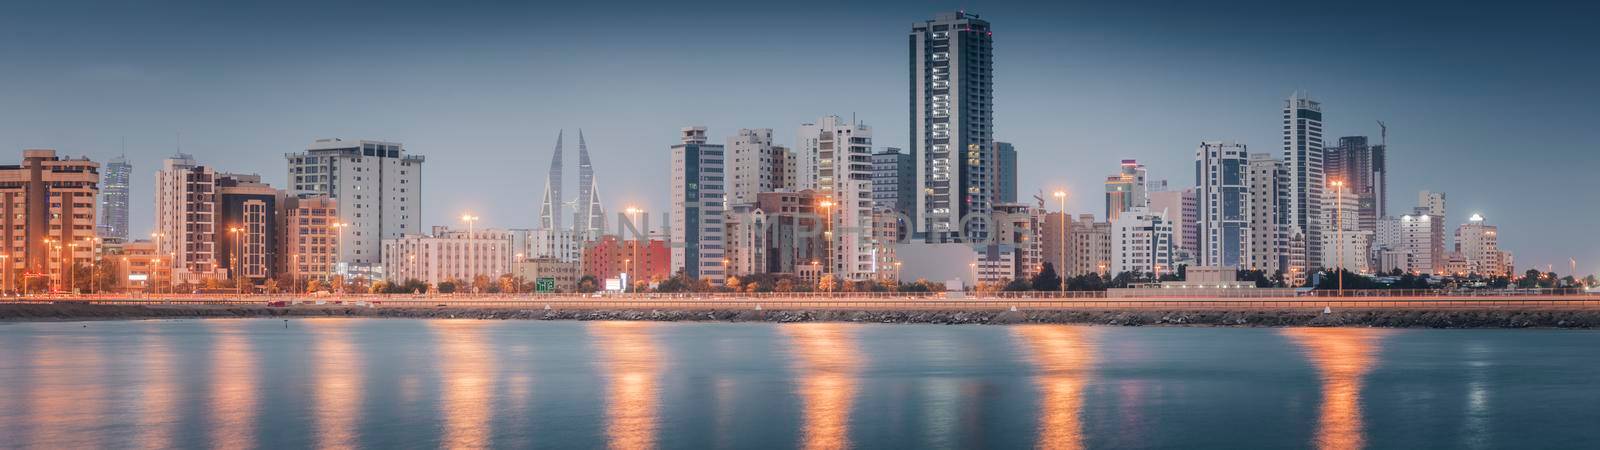 Panoramic view of Juffair and Manama by benkrut